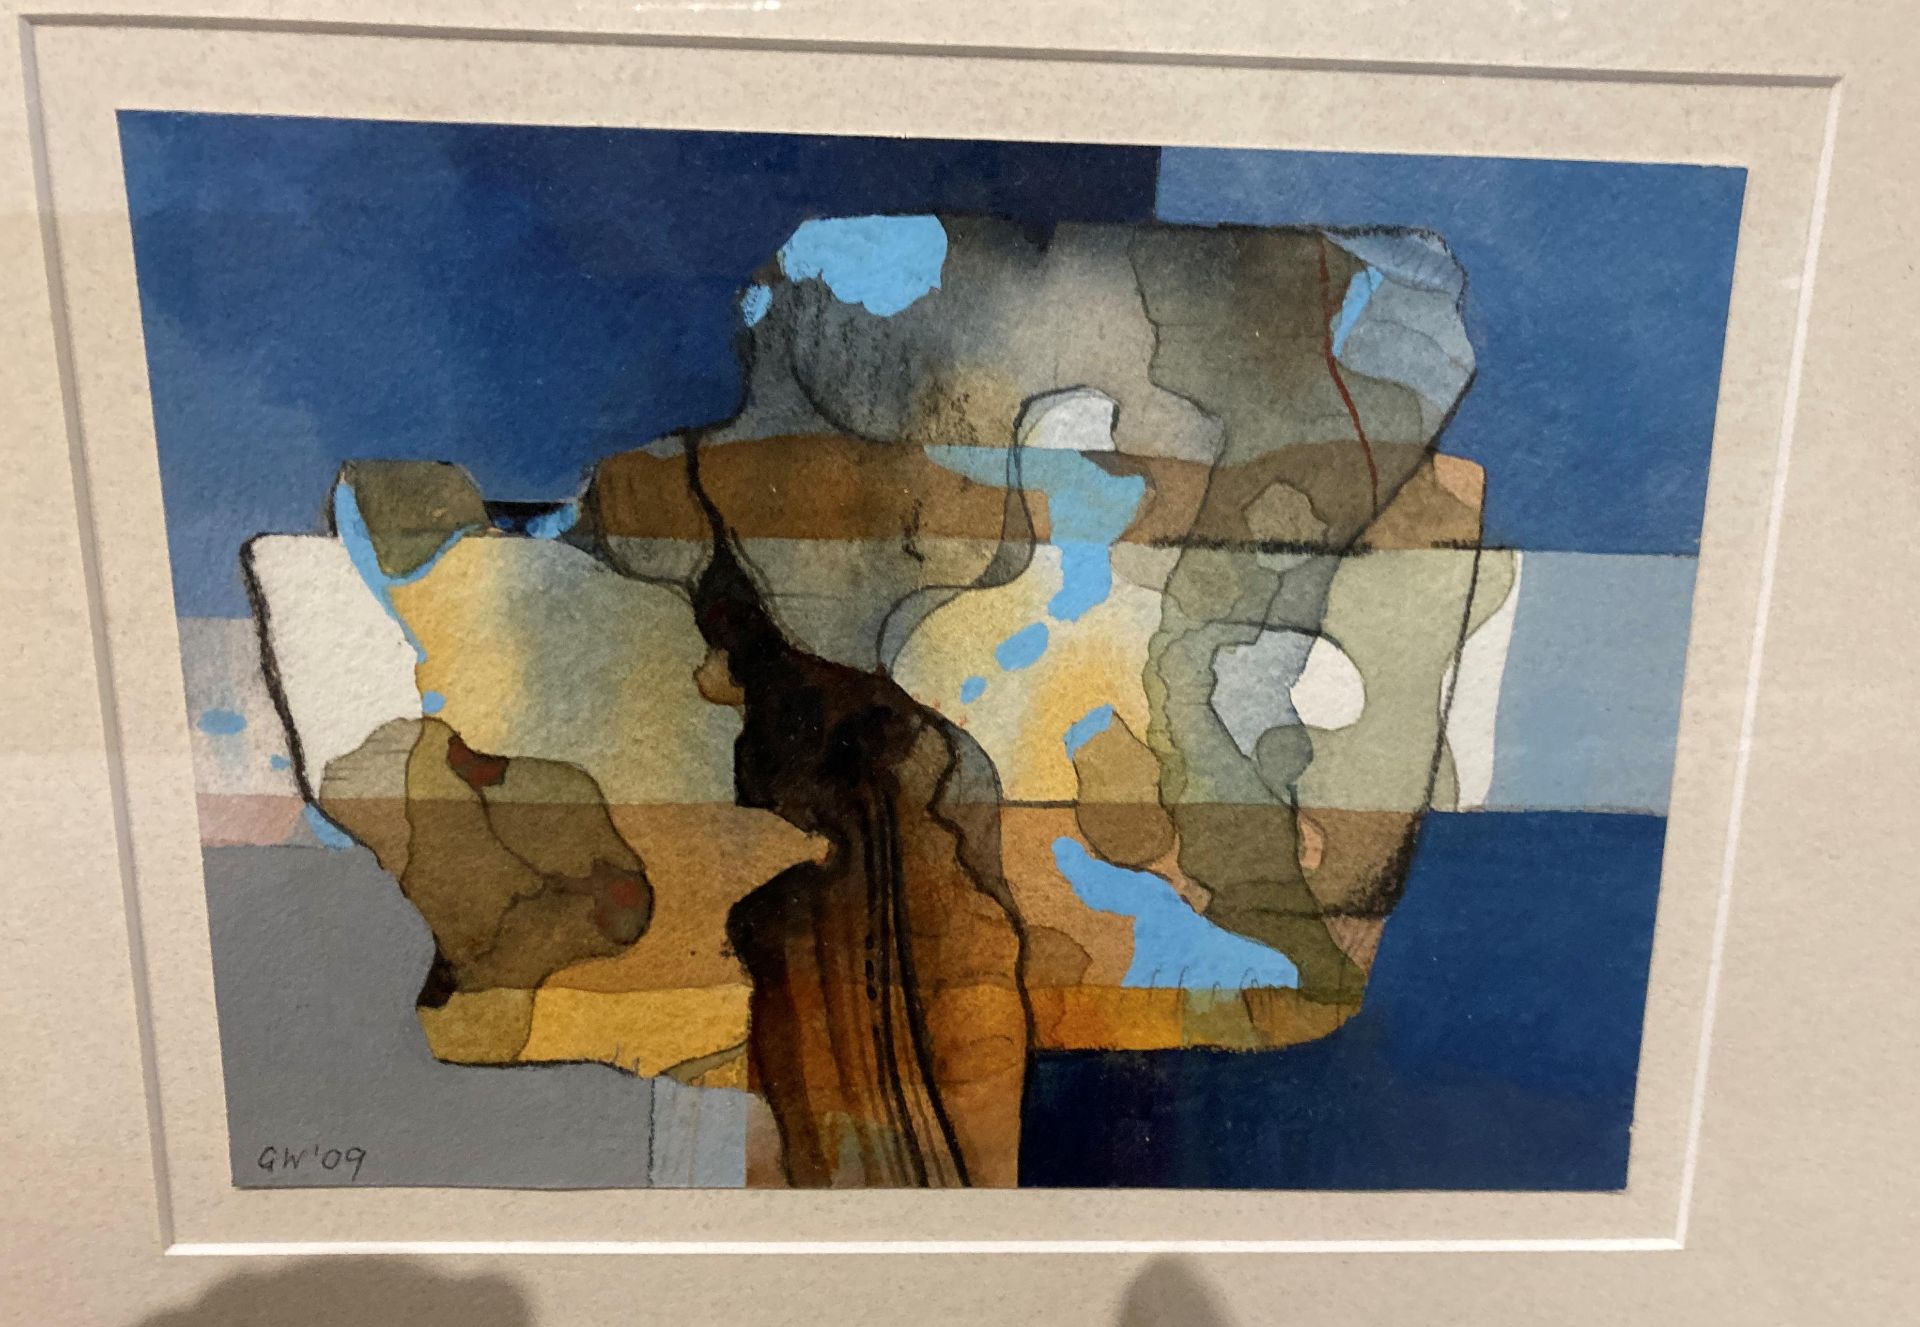 GW '09, 'Rock Formation II', framed mixed media on board, 19cm x 24cm, - Image 2 of 3